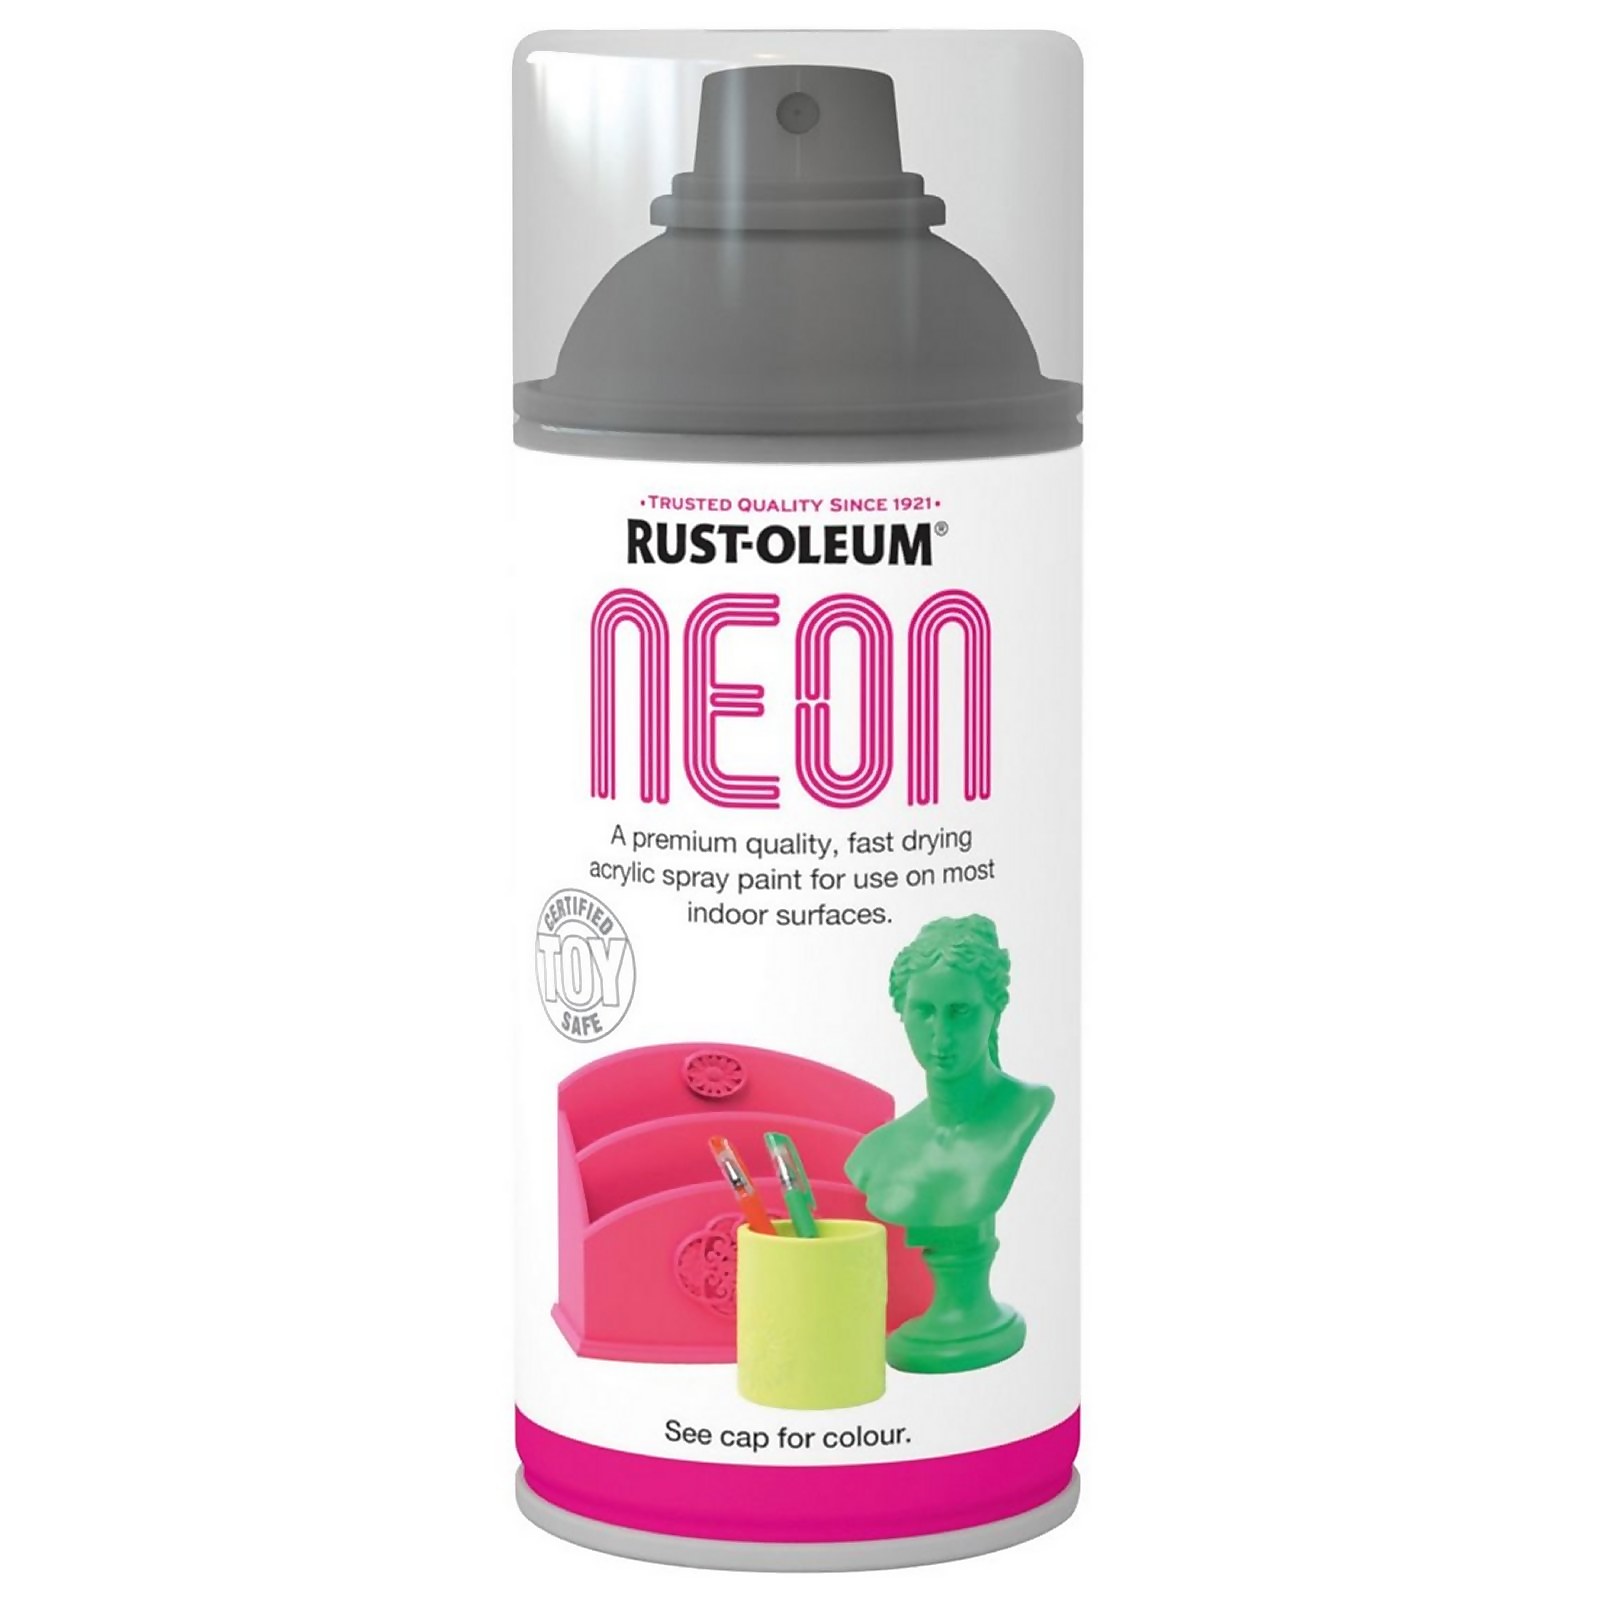 Photo of Rust-oleum - Neon Paint Green - Spray - 150ml